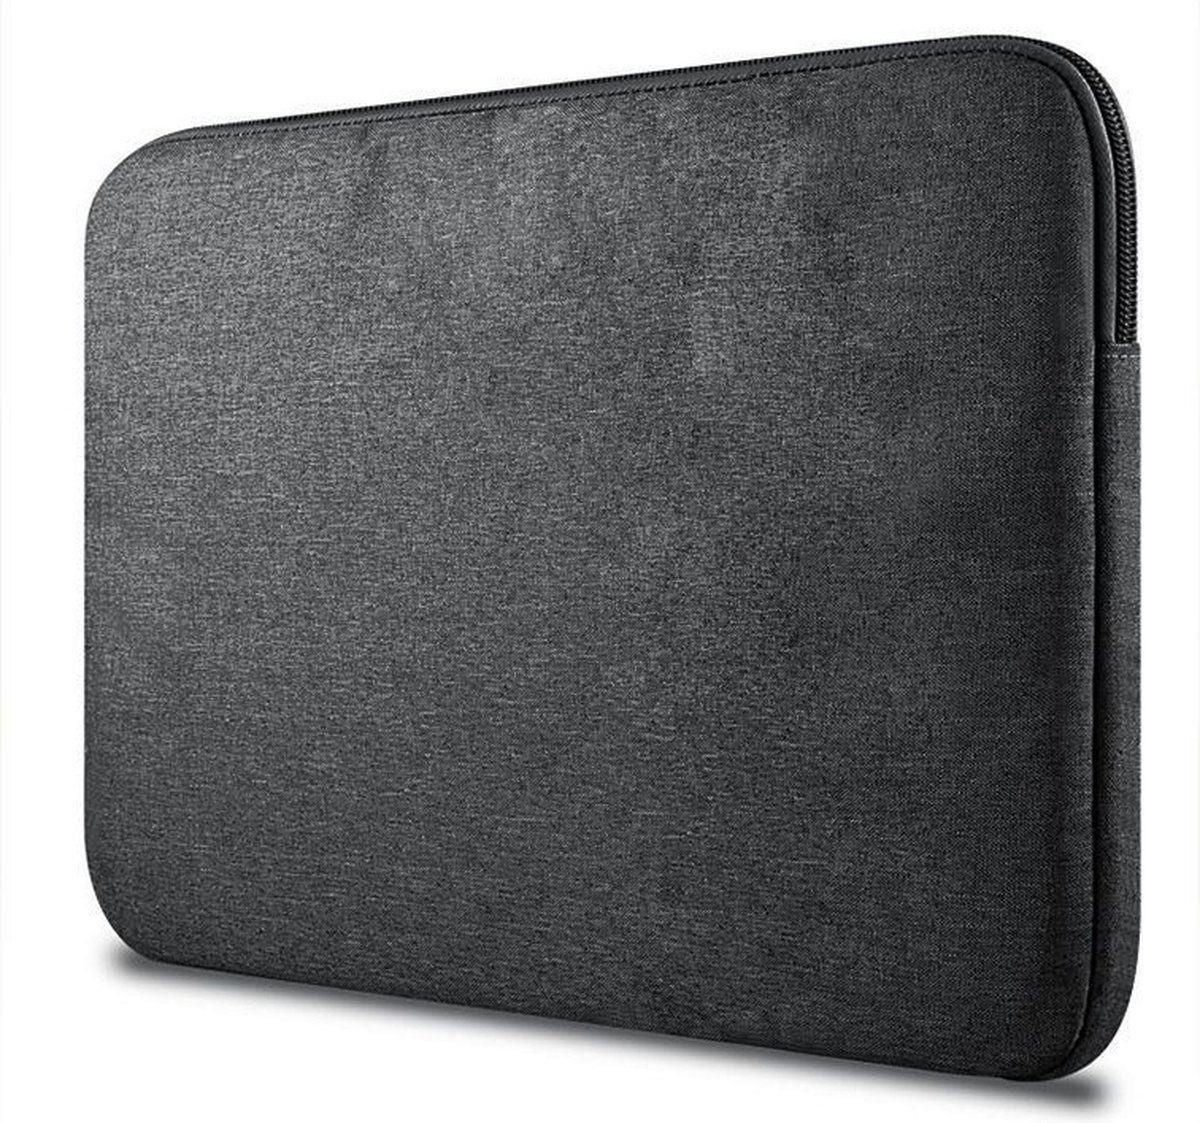 Cazy MacBook 12/Air 11 Hoes / Sleeve - Grijs